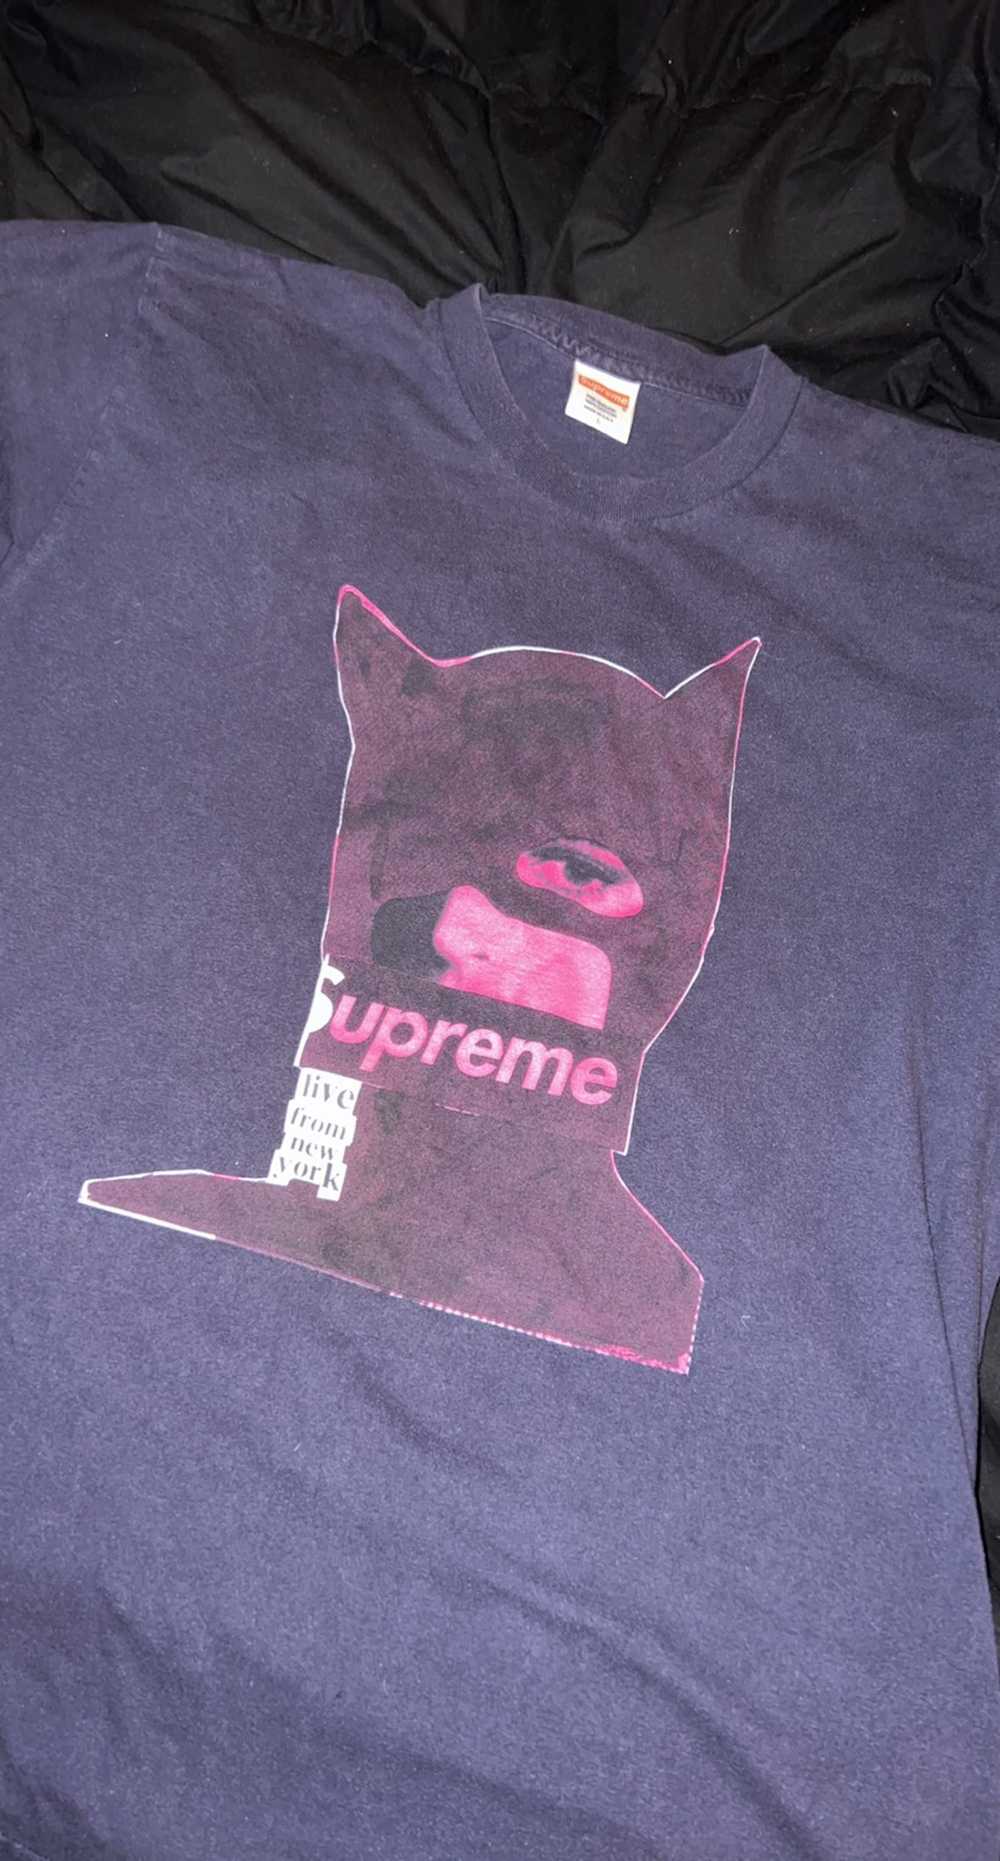 Supreme Supreme cat woman shirt - image 1